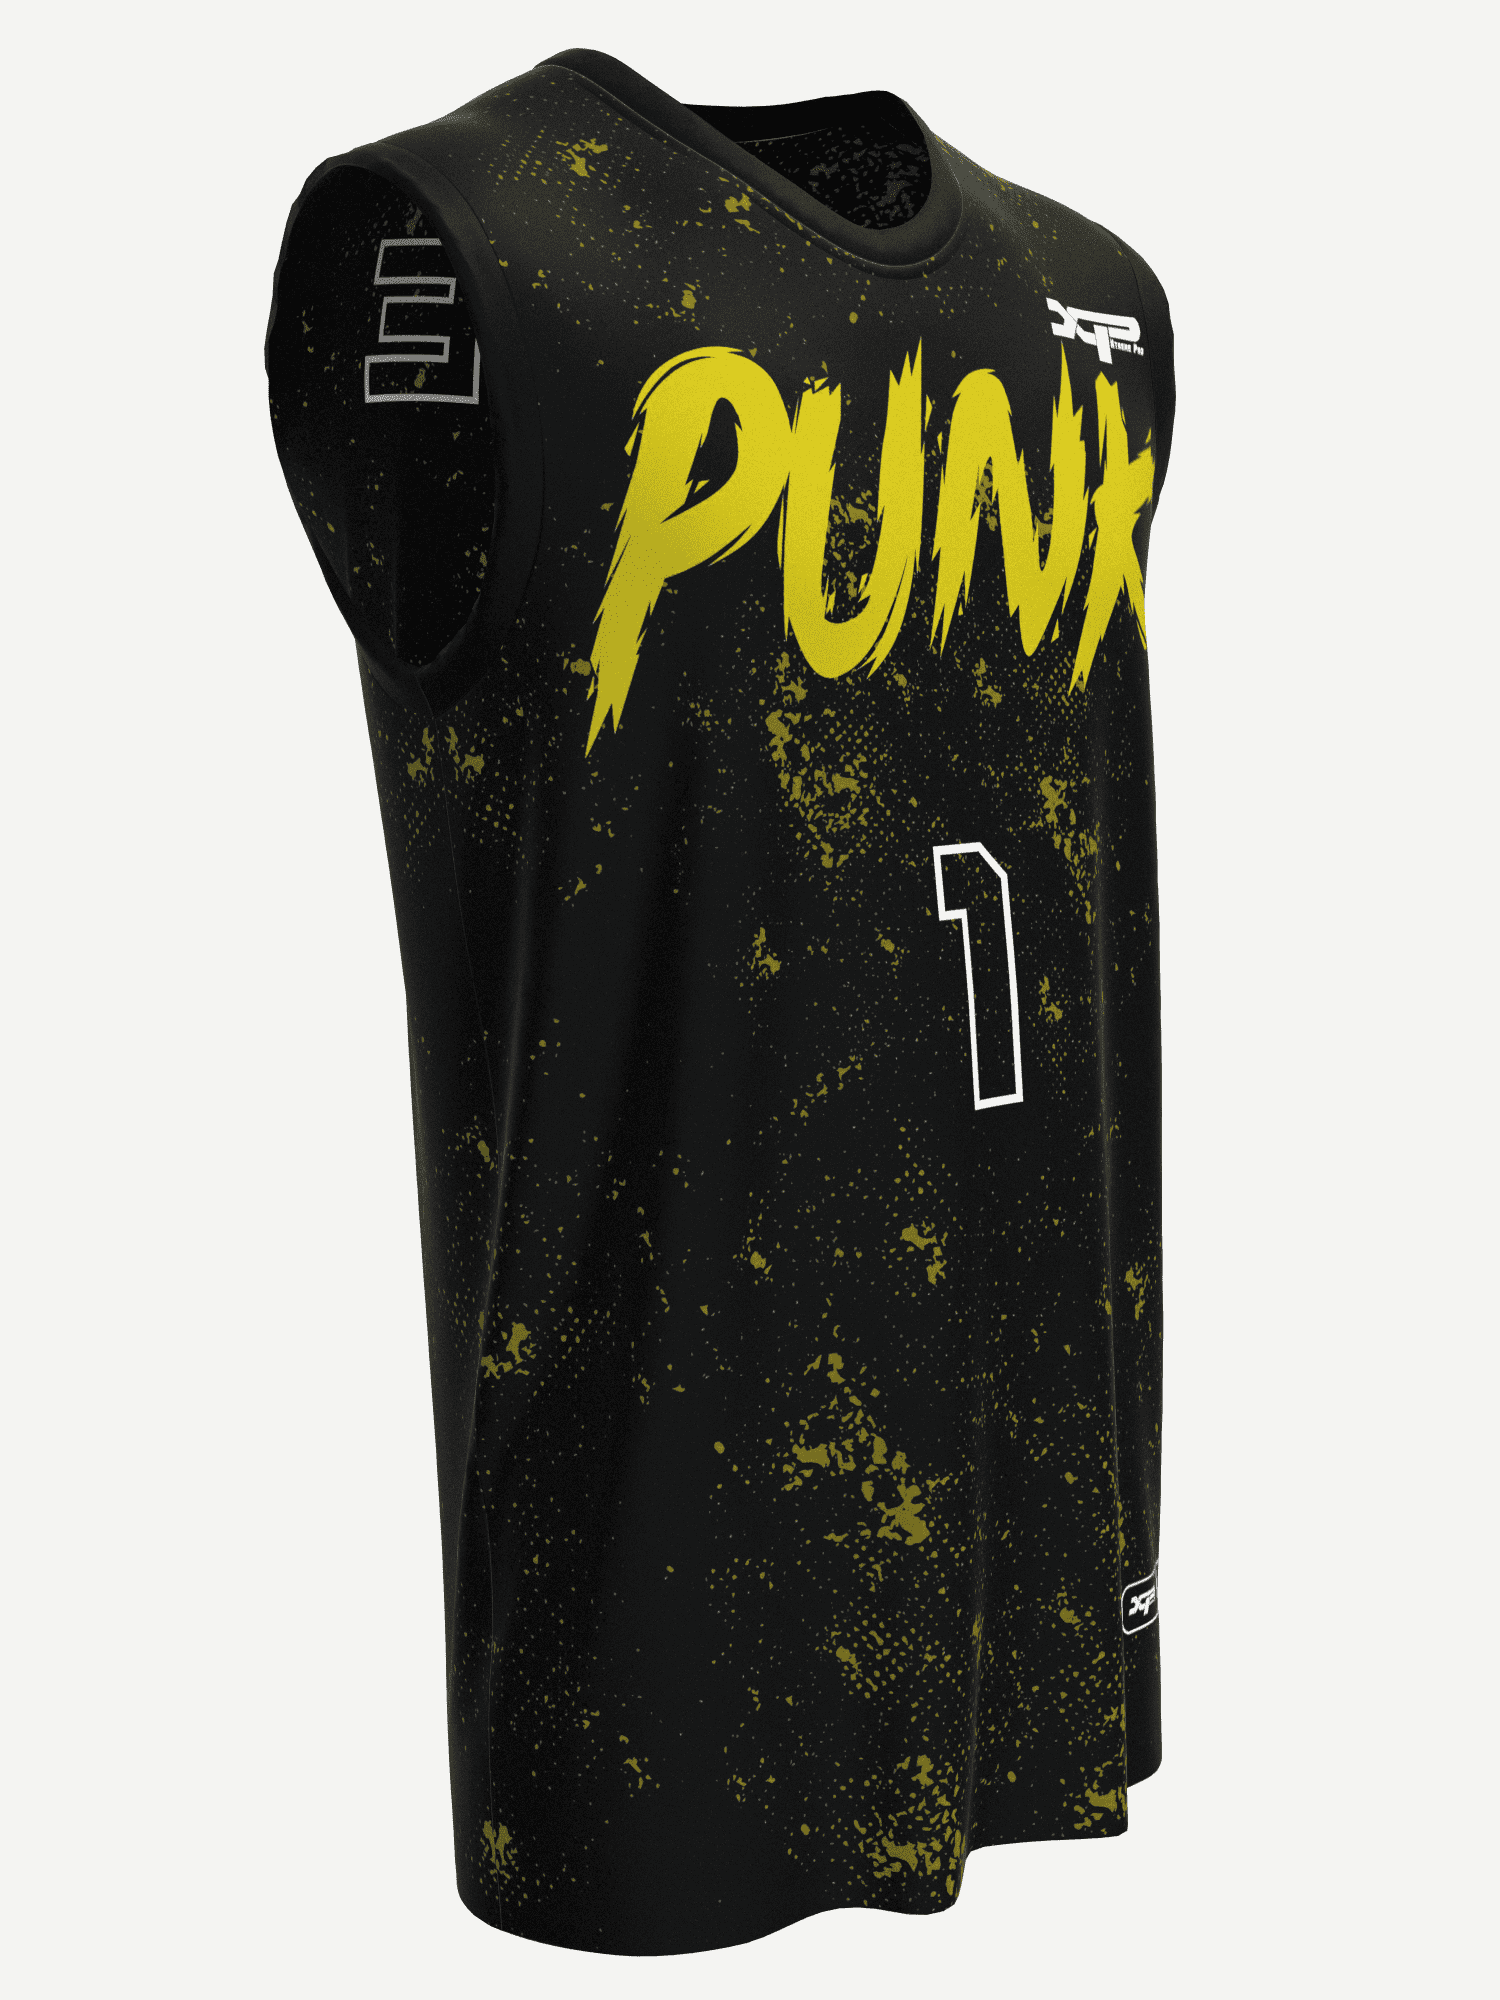 Punk Jersey Xtreme Pro Apparel